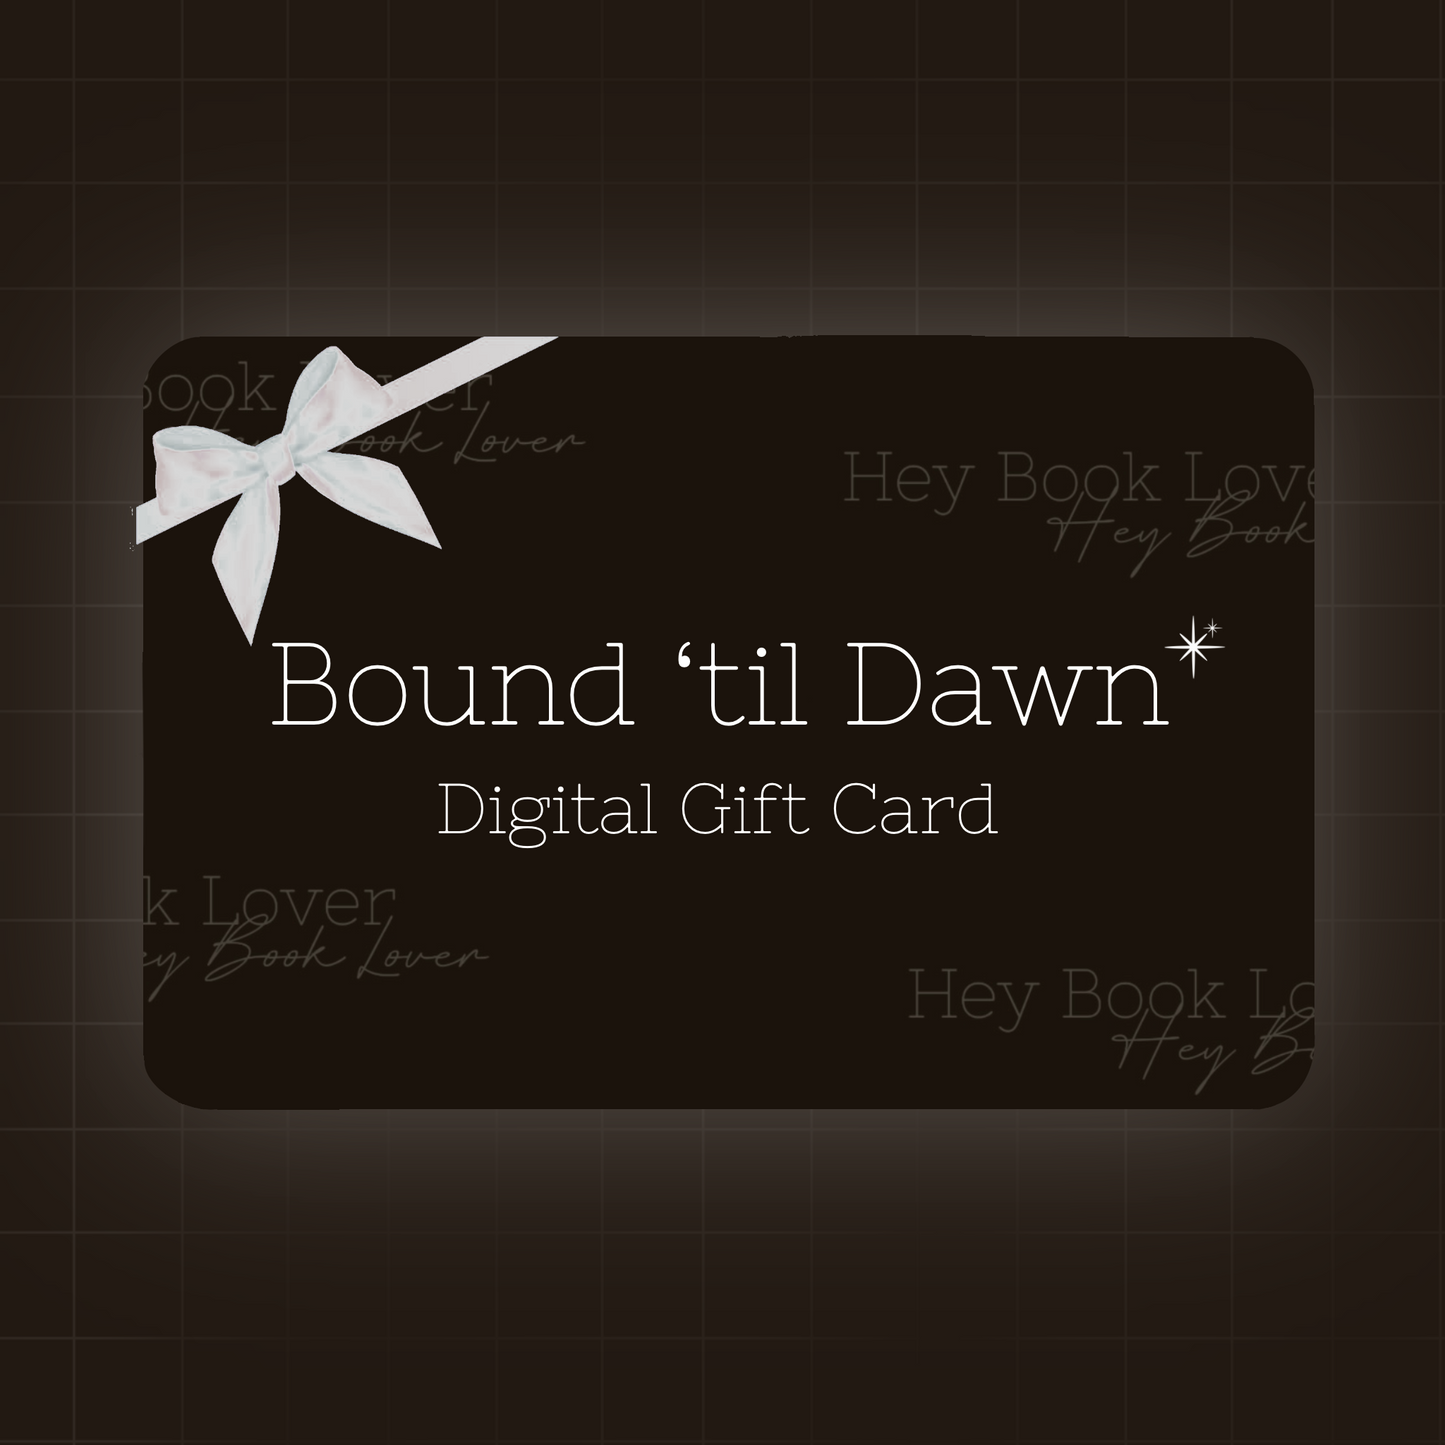 Bound ‘til Dawn Digital Gift Card